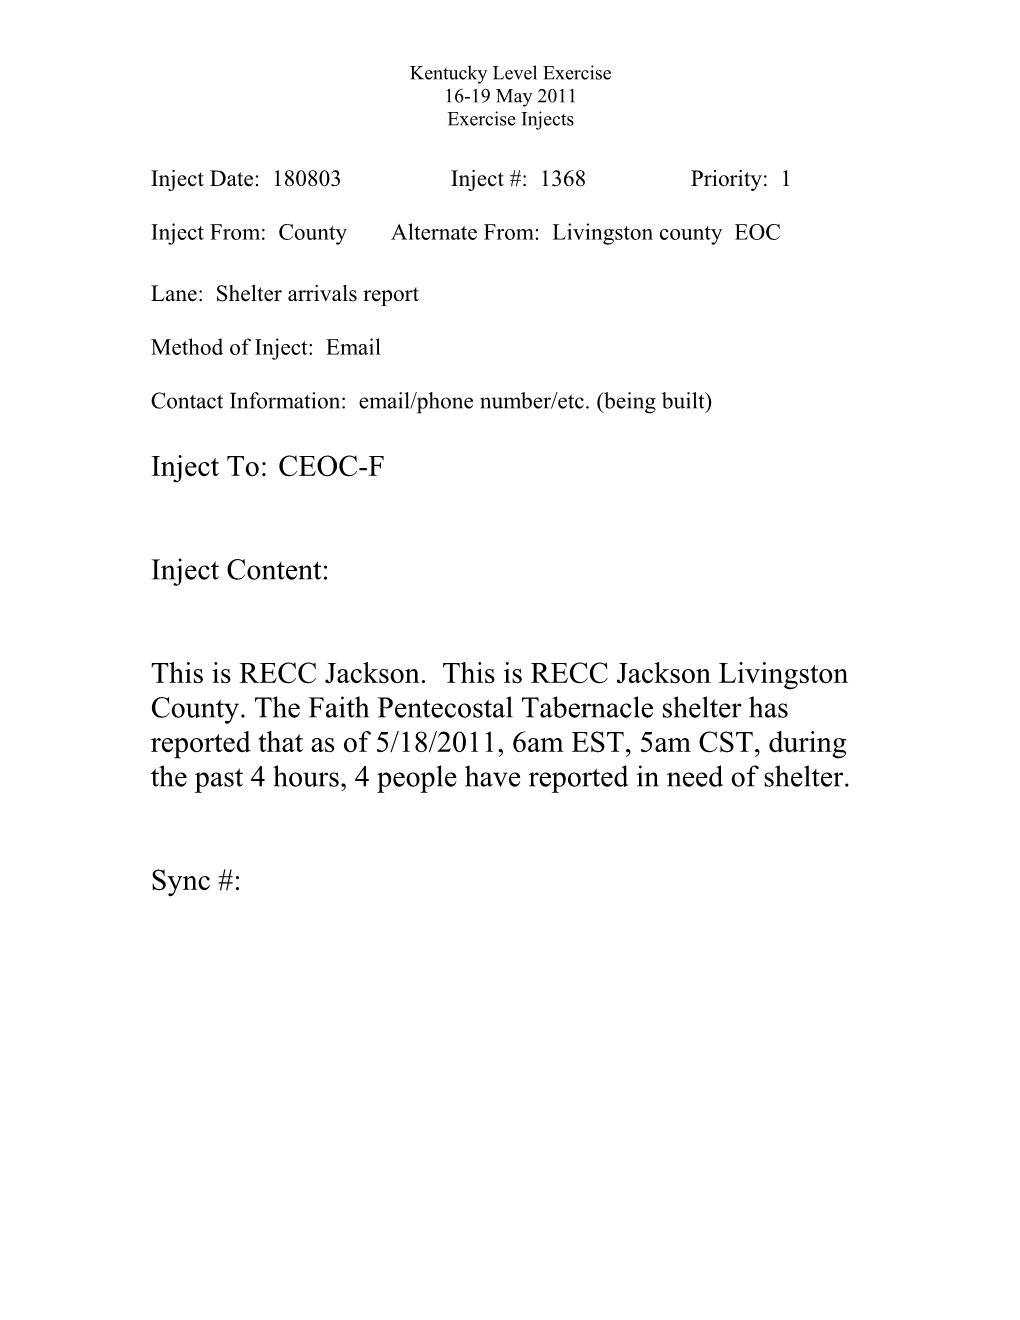 RECC Jackson 18-19 May Injects